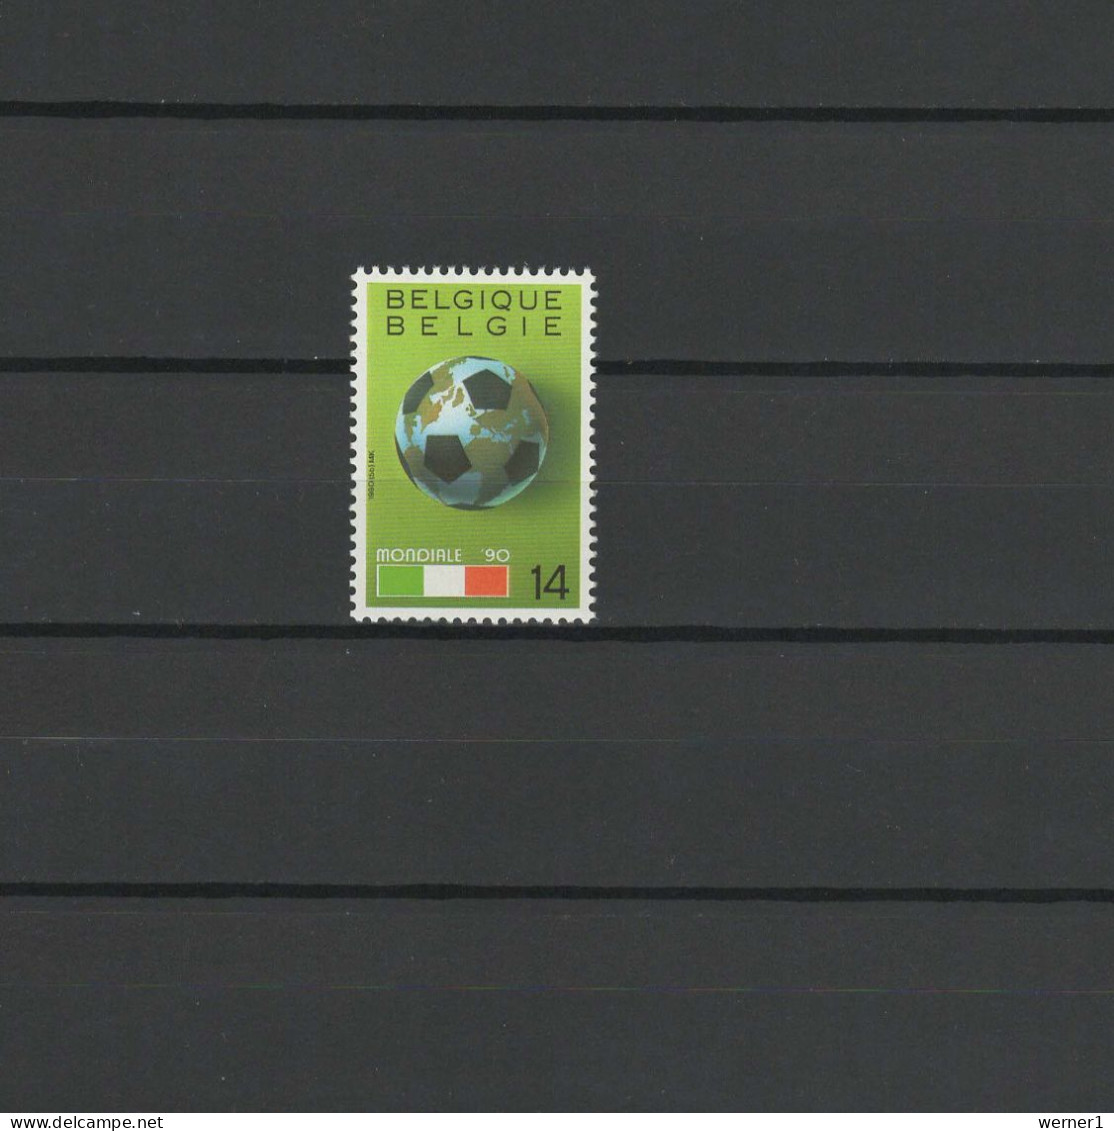 Belgium 1990 Football Soccer World Cup Stamp MNH - 1990 – Italie